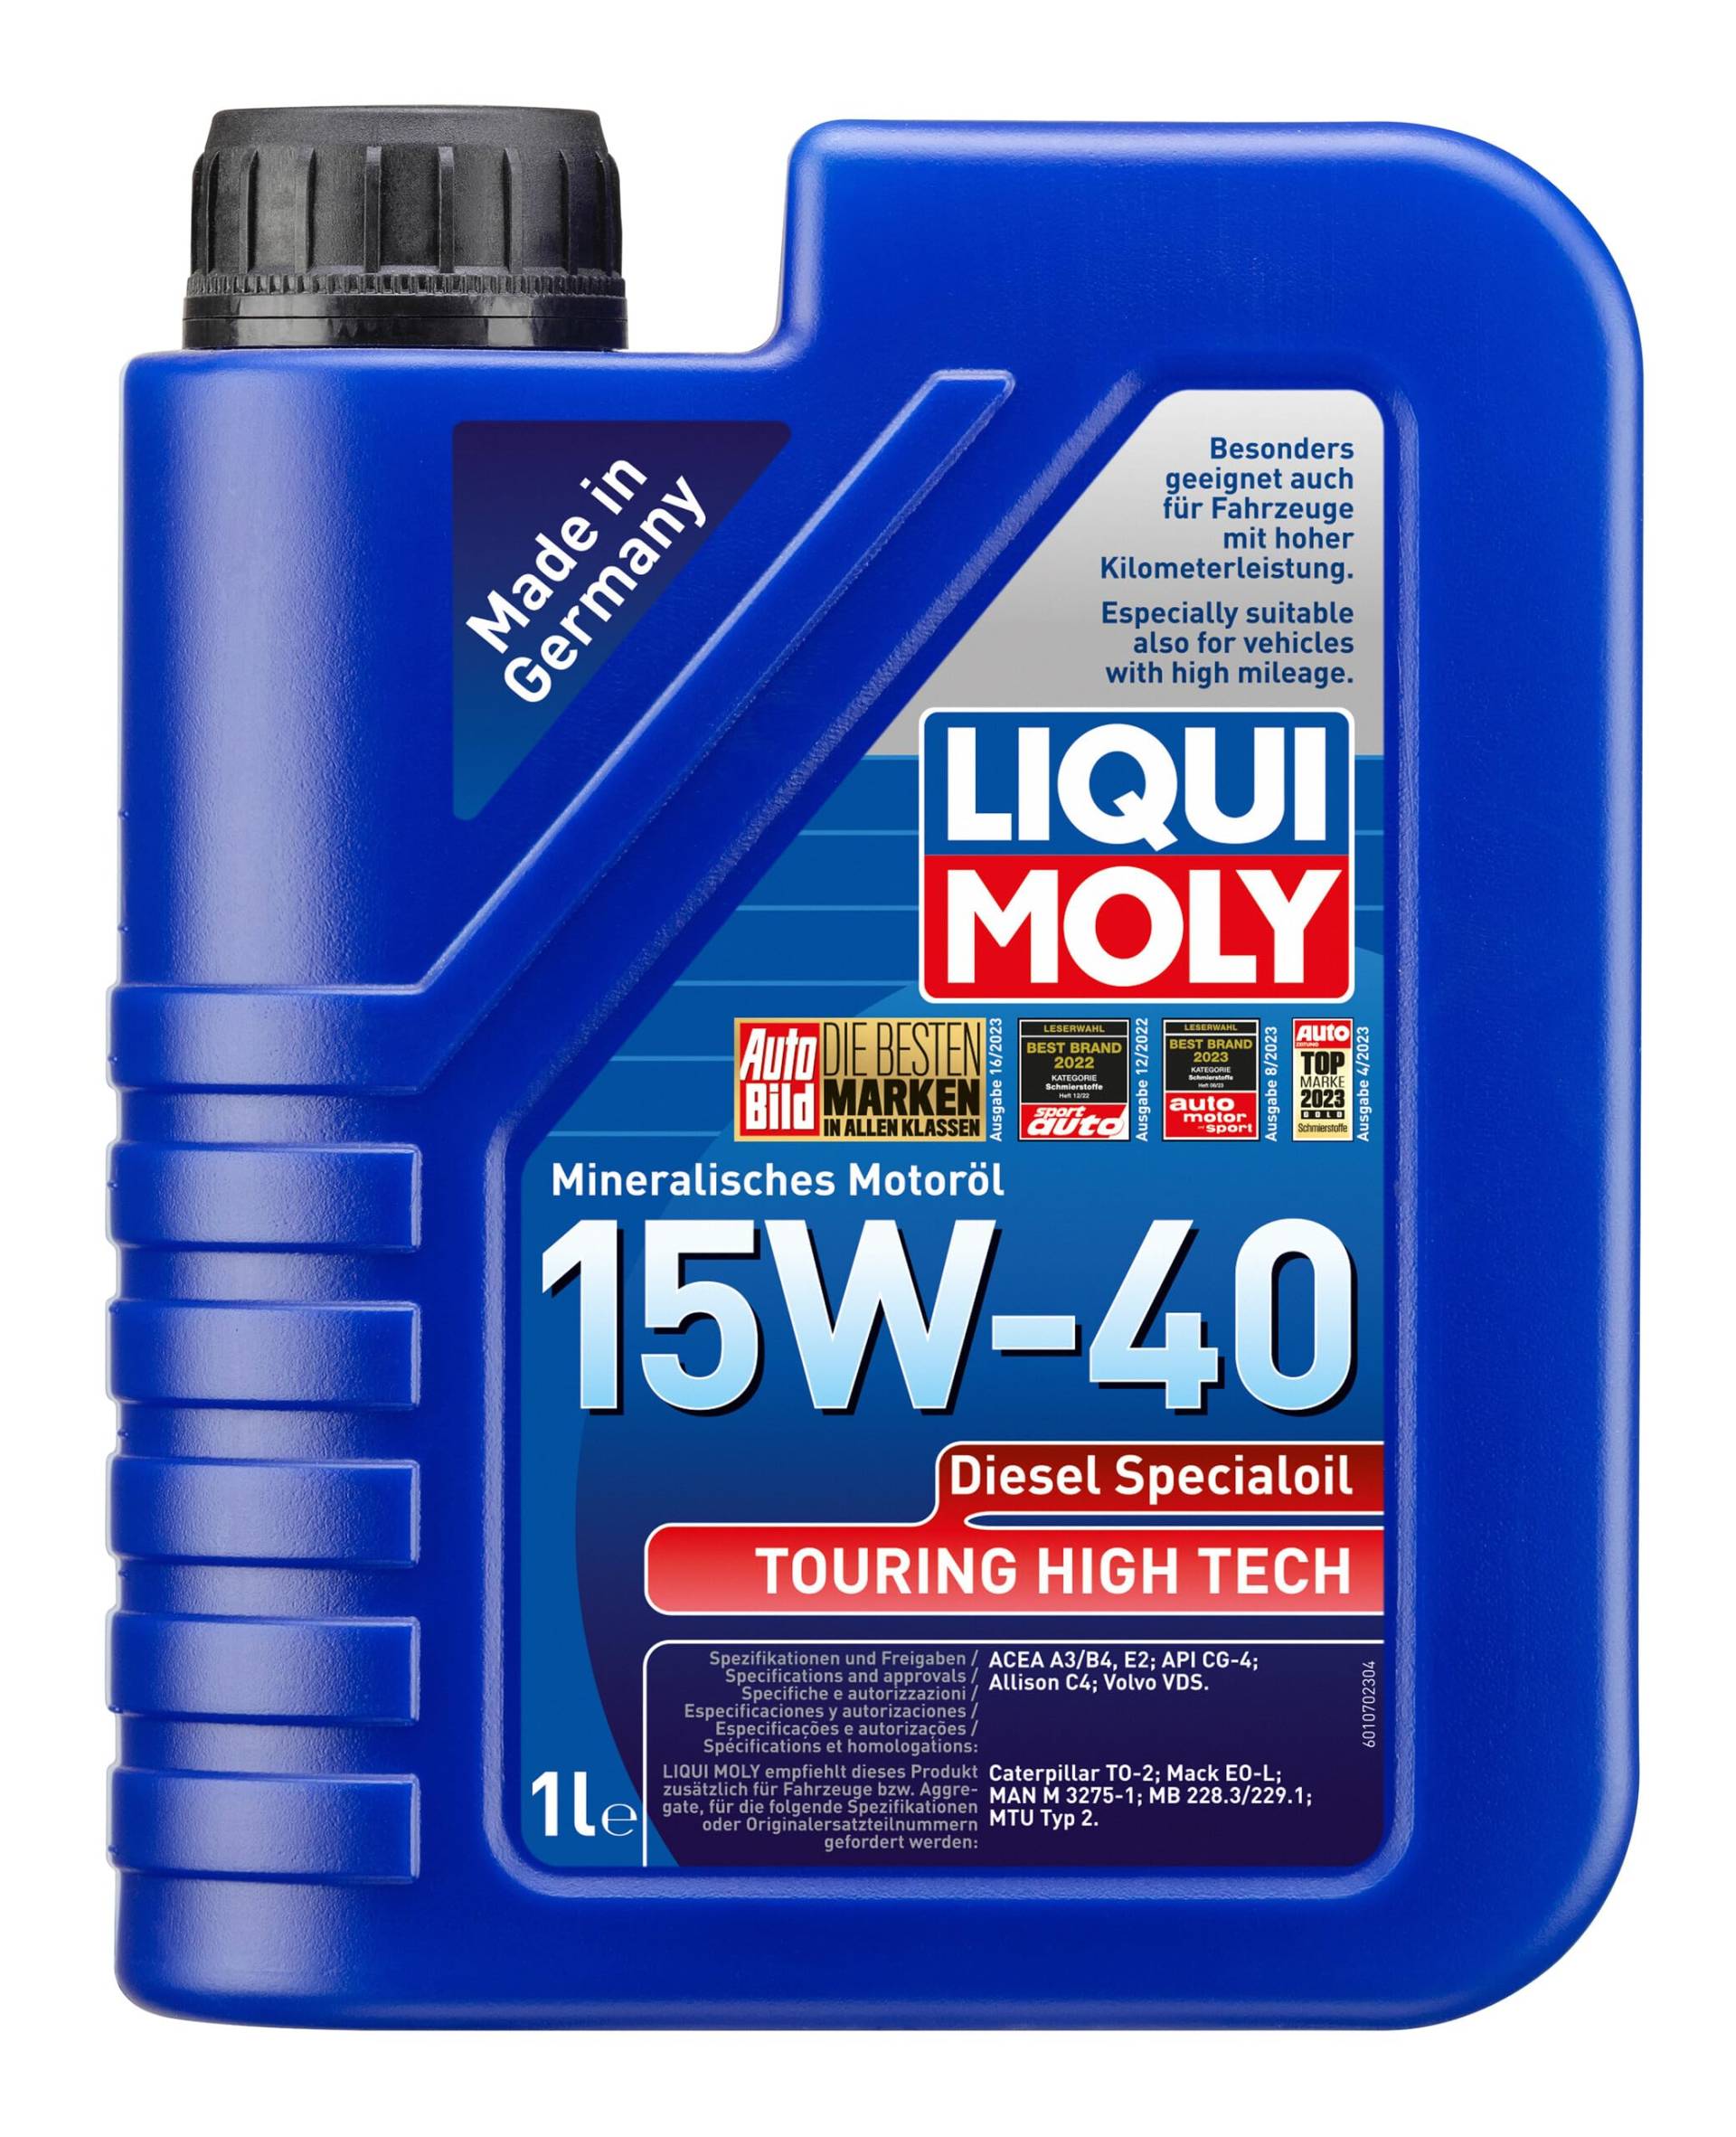 LIQUI MOLY Touring High Tech Diesel Specialoil 15W-40 | 1 L | mineralisches Motoröl | Art.-Nr.: 1070 von Liqui Moly